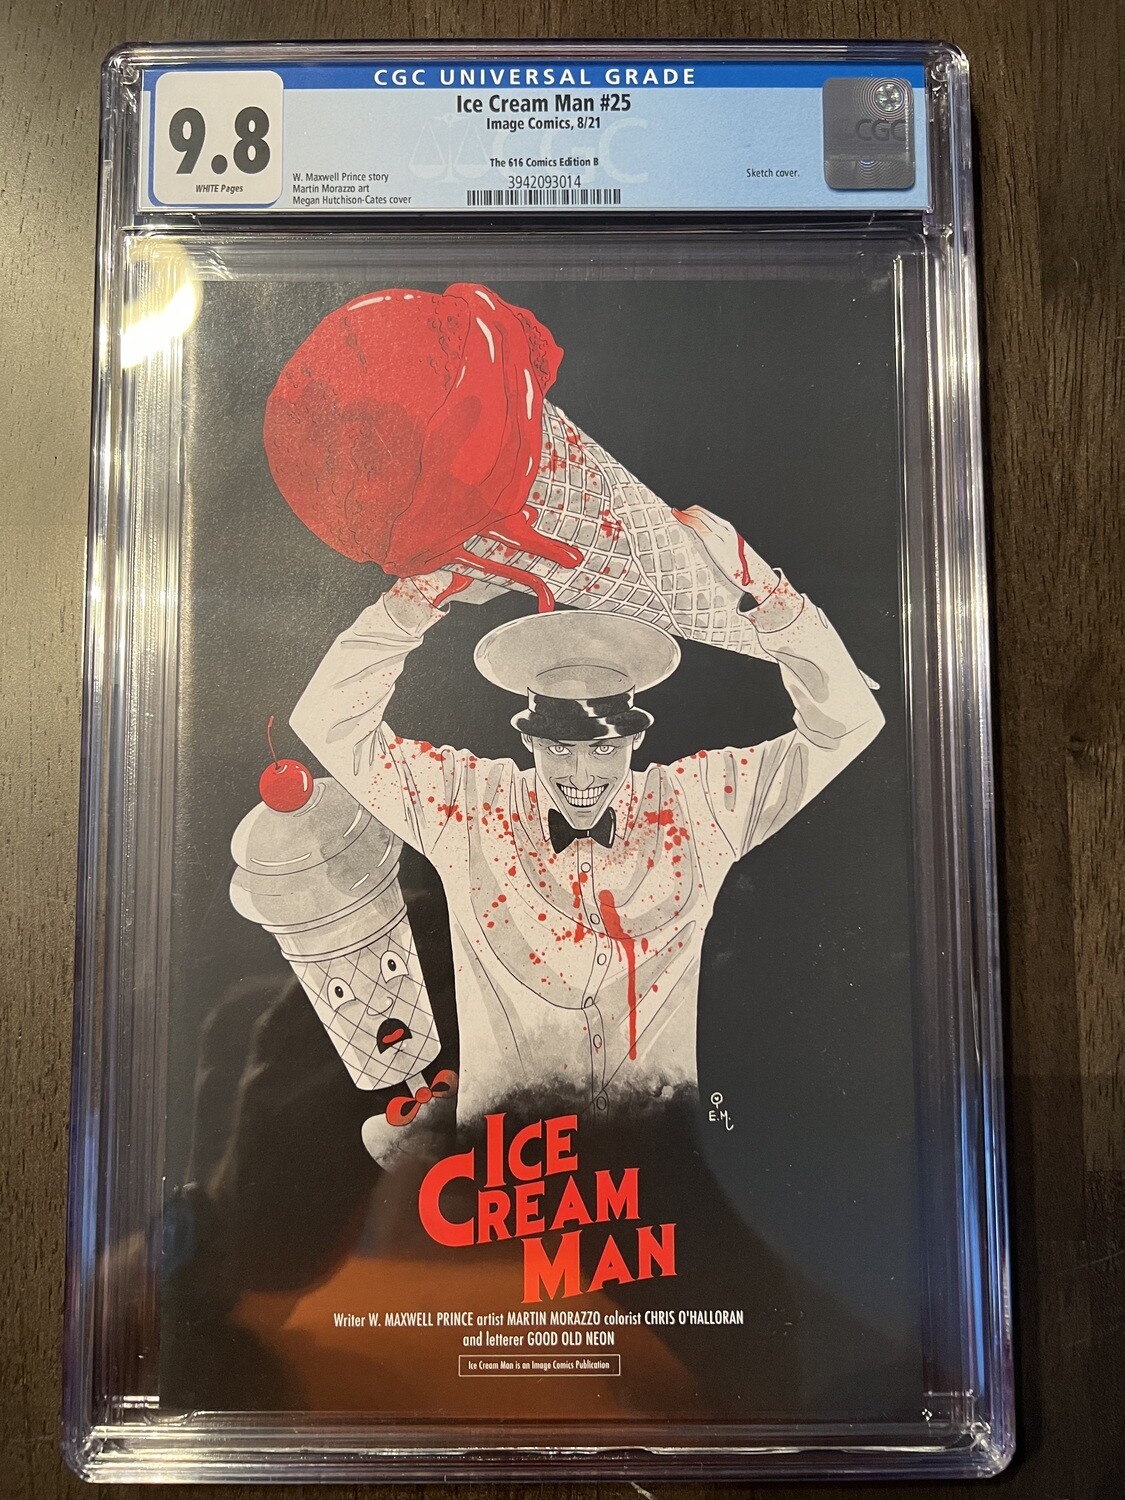 ICE CREAM MAN #25 HUTCHISON-CATES VARIANT GRADED CGC 9.8